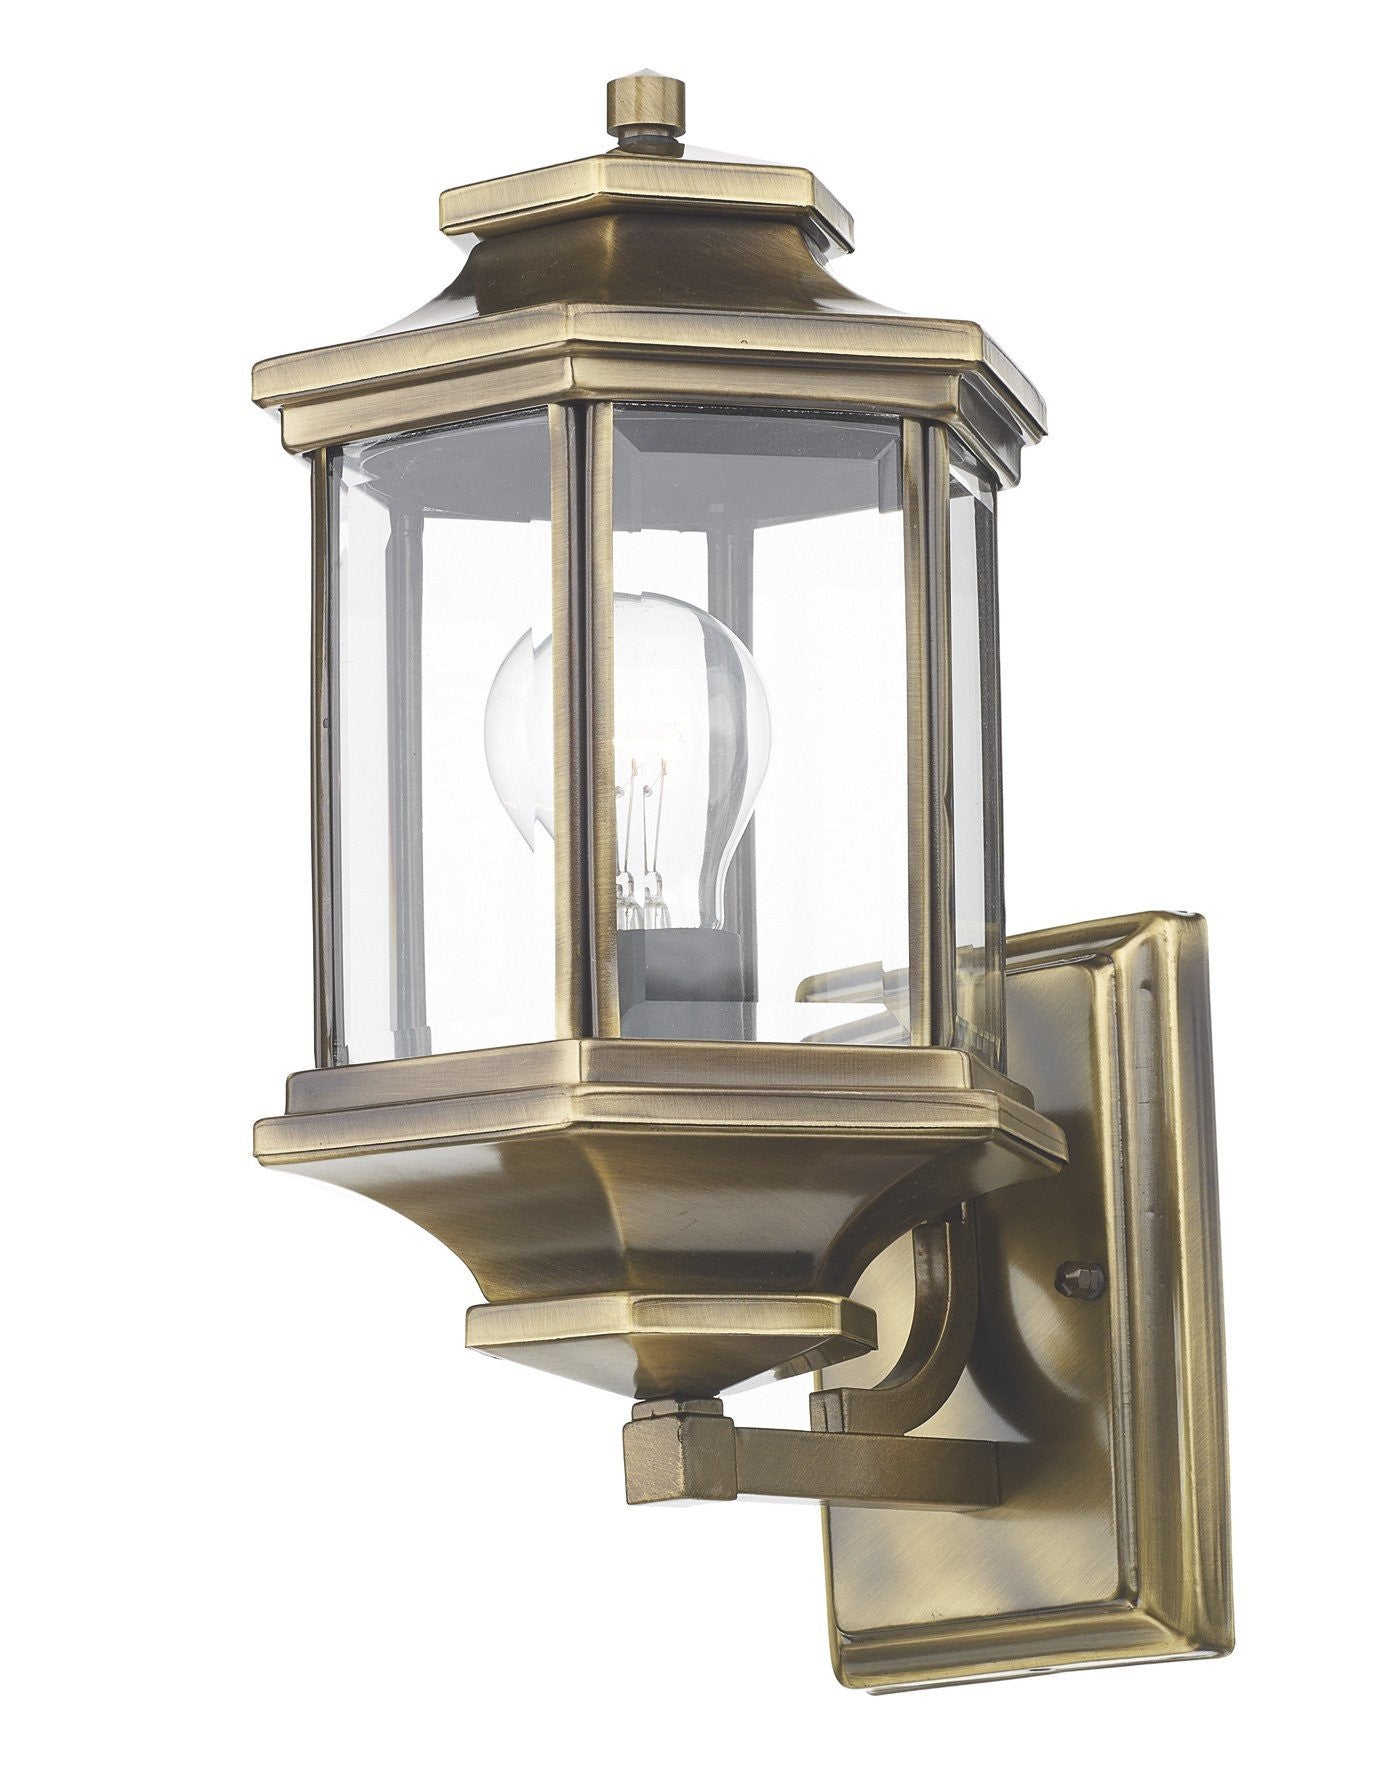 Ladbroke Antique Brass Lantern - London Lighting - 1